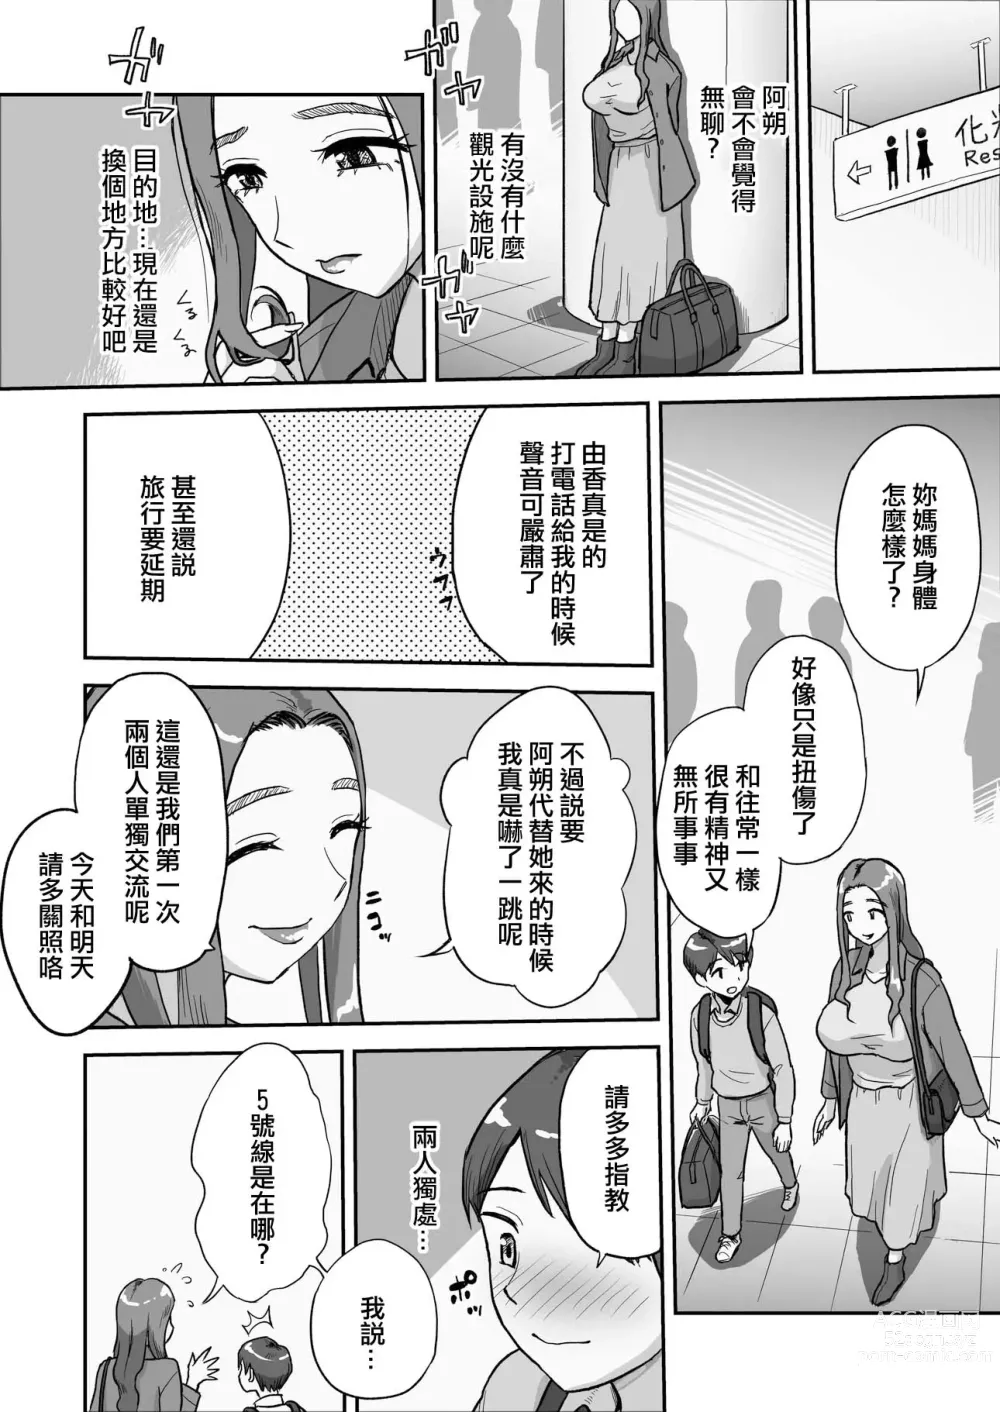 Page 5 of doujinshi 僅此一天的媽媽 這是隻屬於我們...兩人的秘密...哦?....